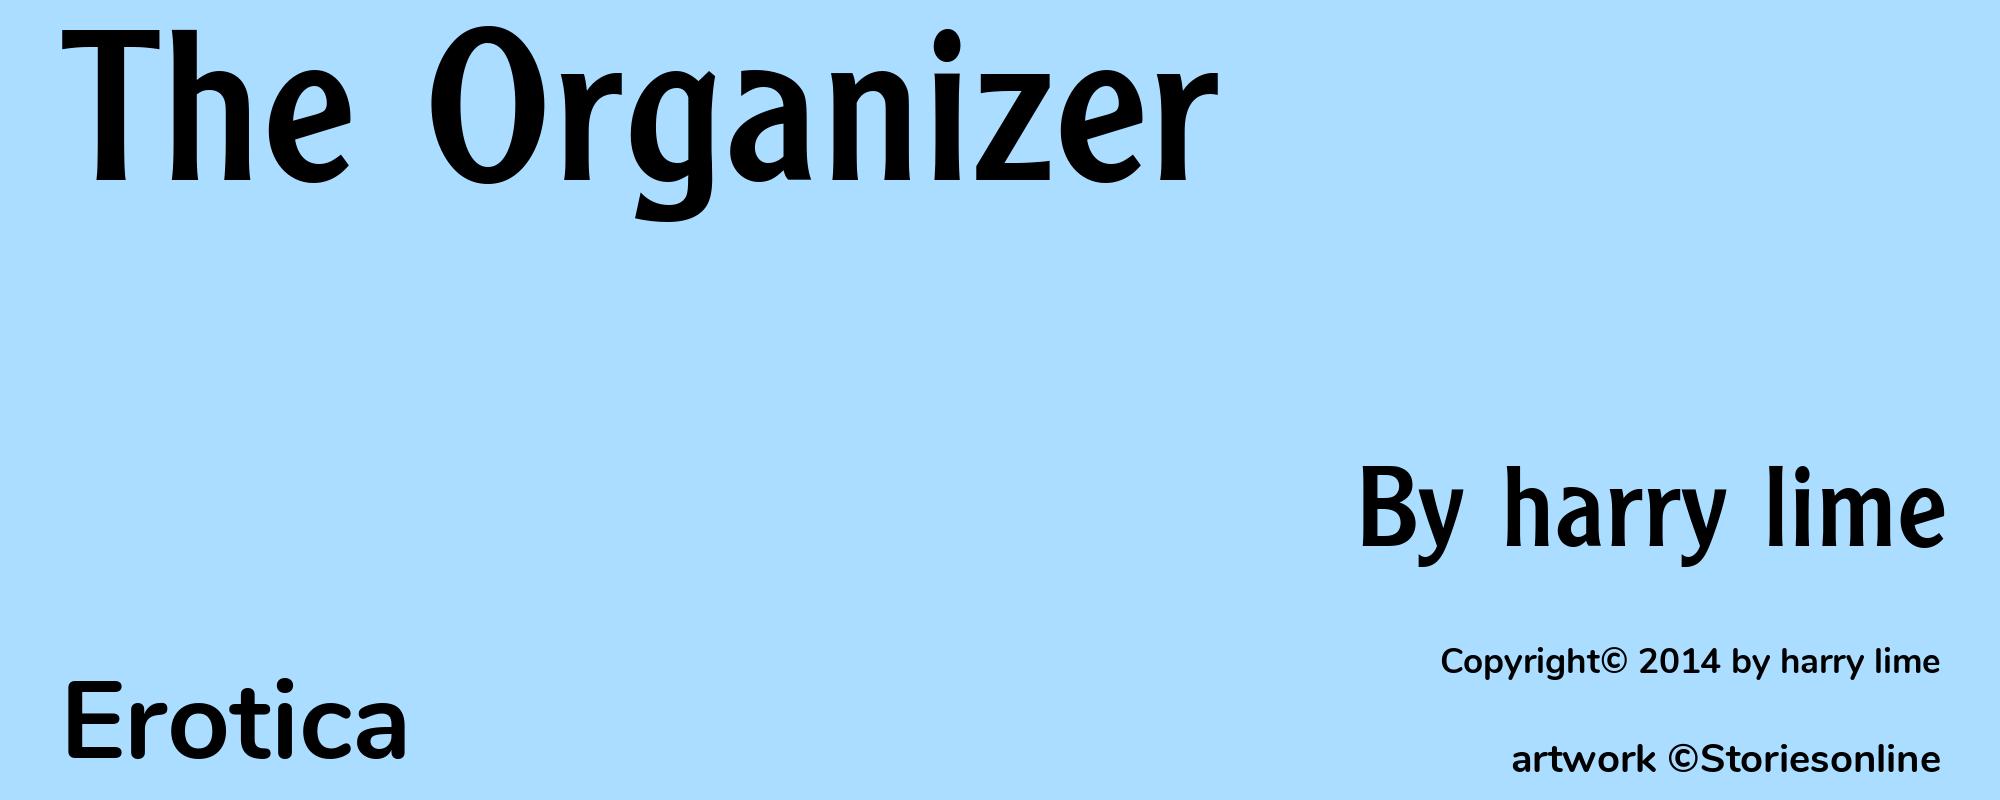 The Organizer - Cover